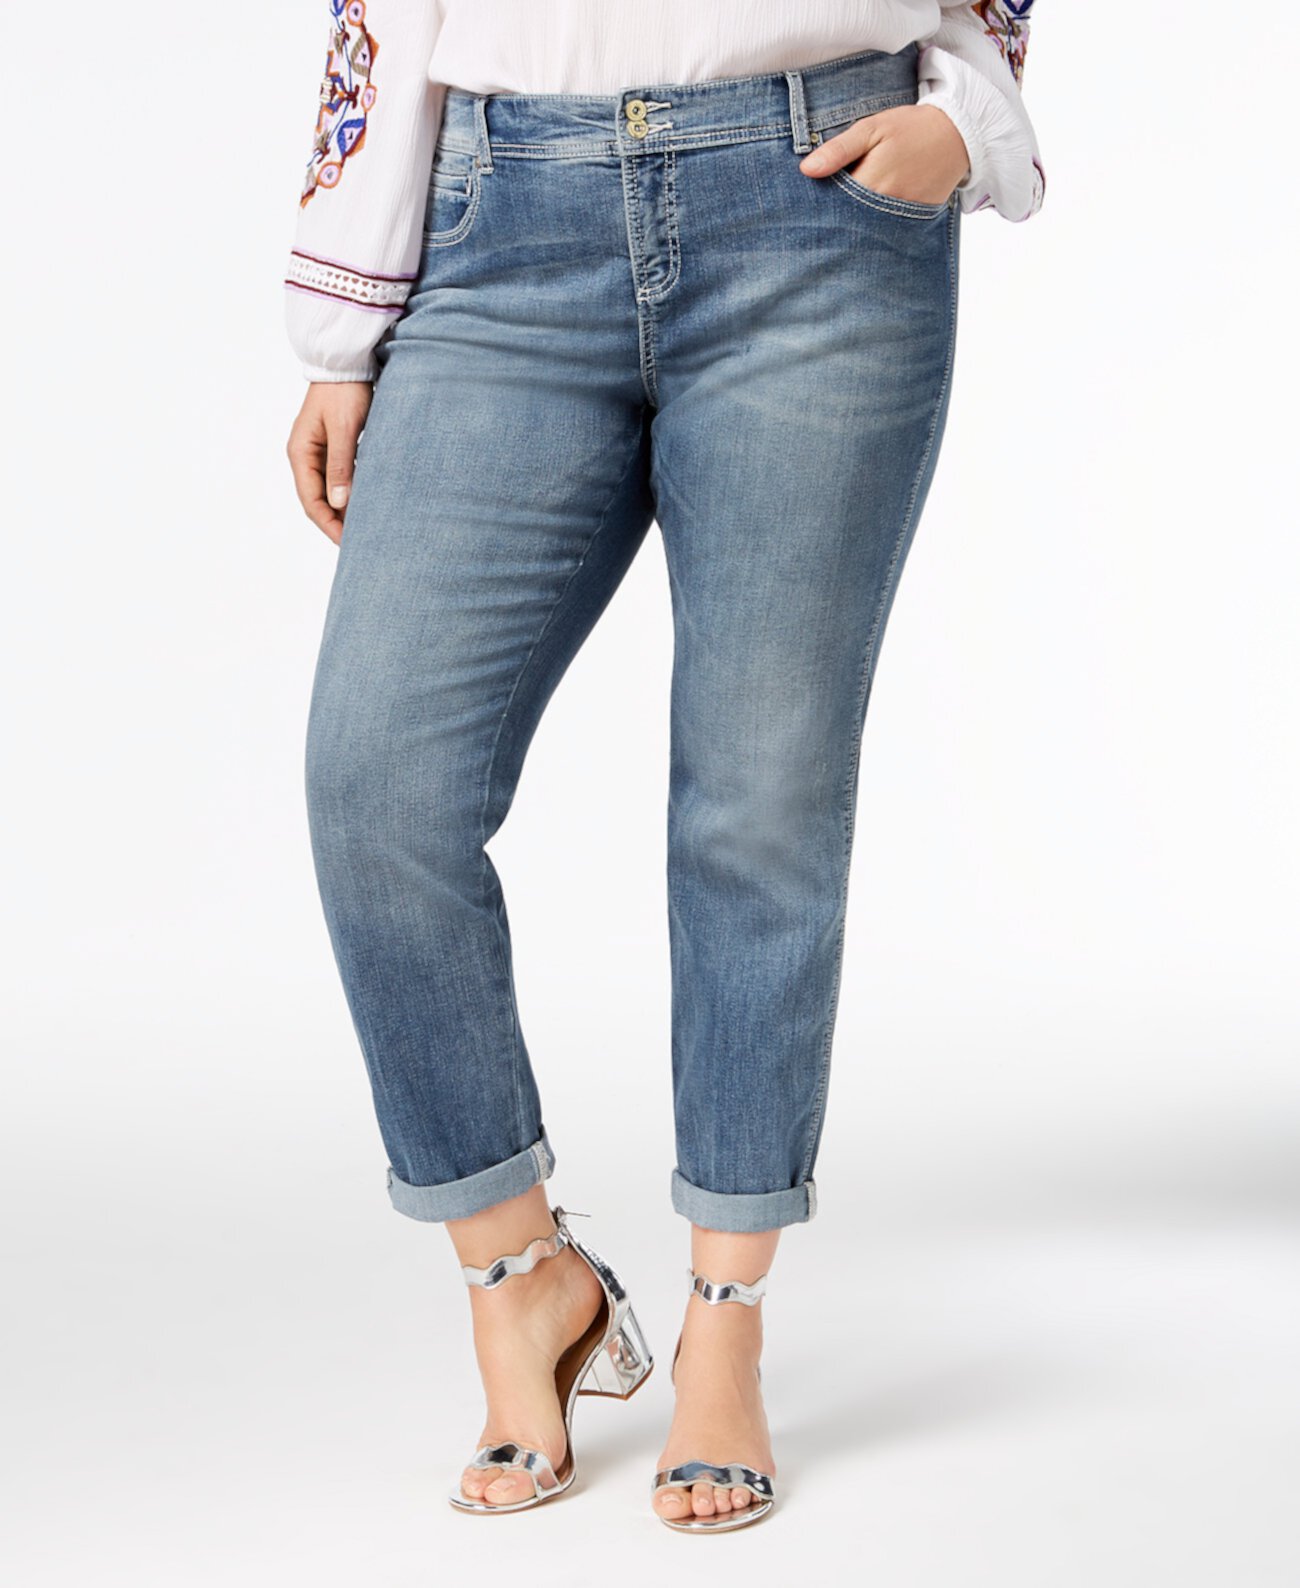 Большие бойфренды. Джинсы бойфренды плюс сайз. Bootcut джинсы Plus Size. Джинсы женские. Plus Size в джинсах.